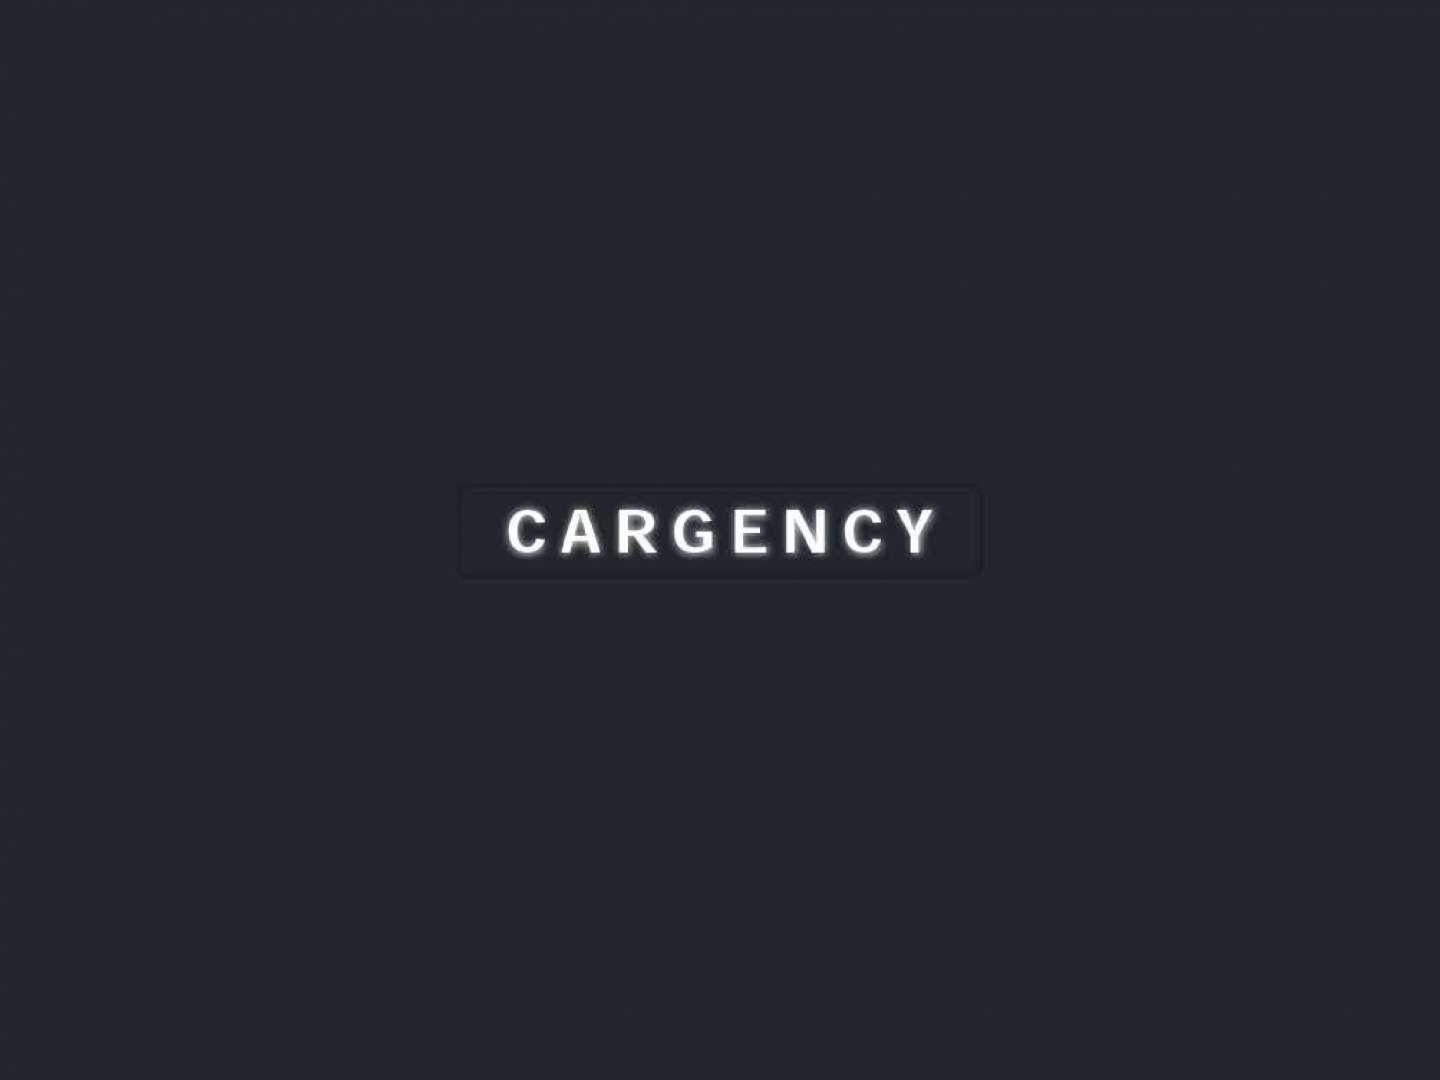 Cargency